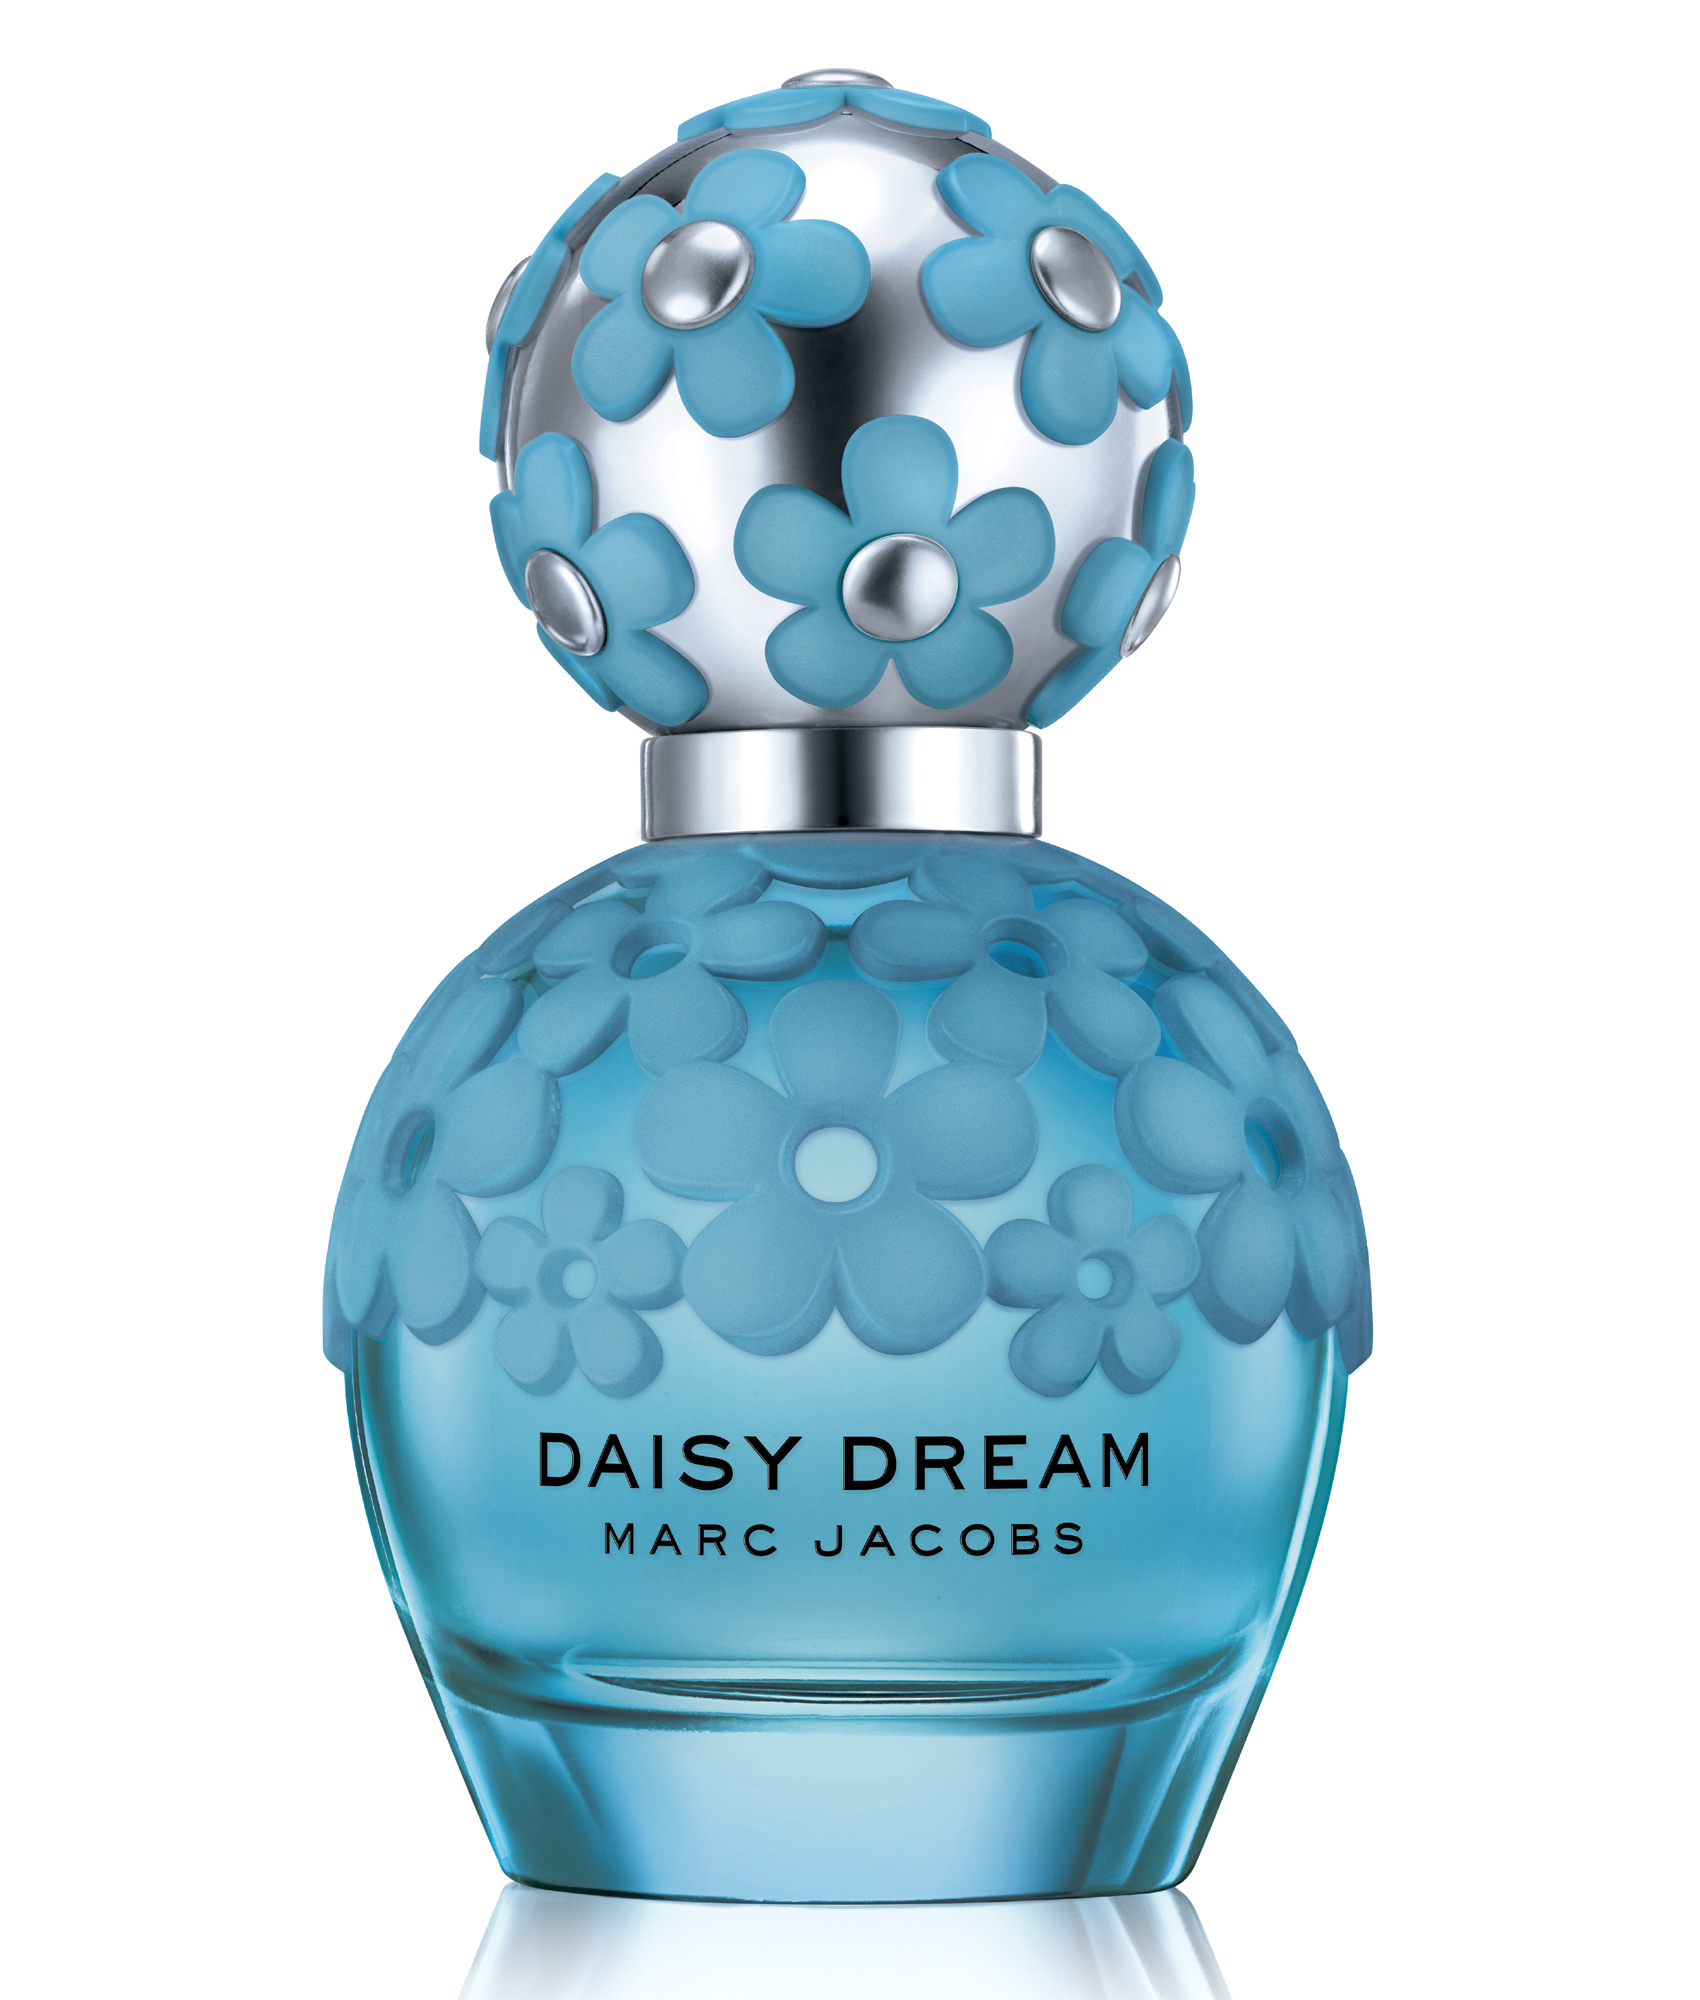 daisy dream forever